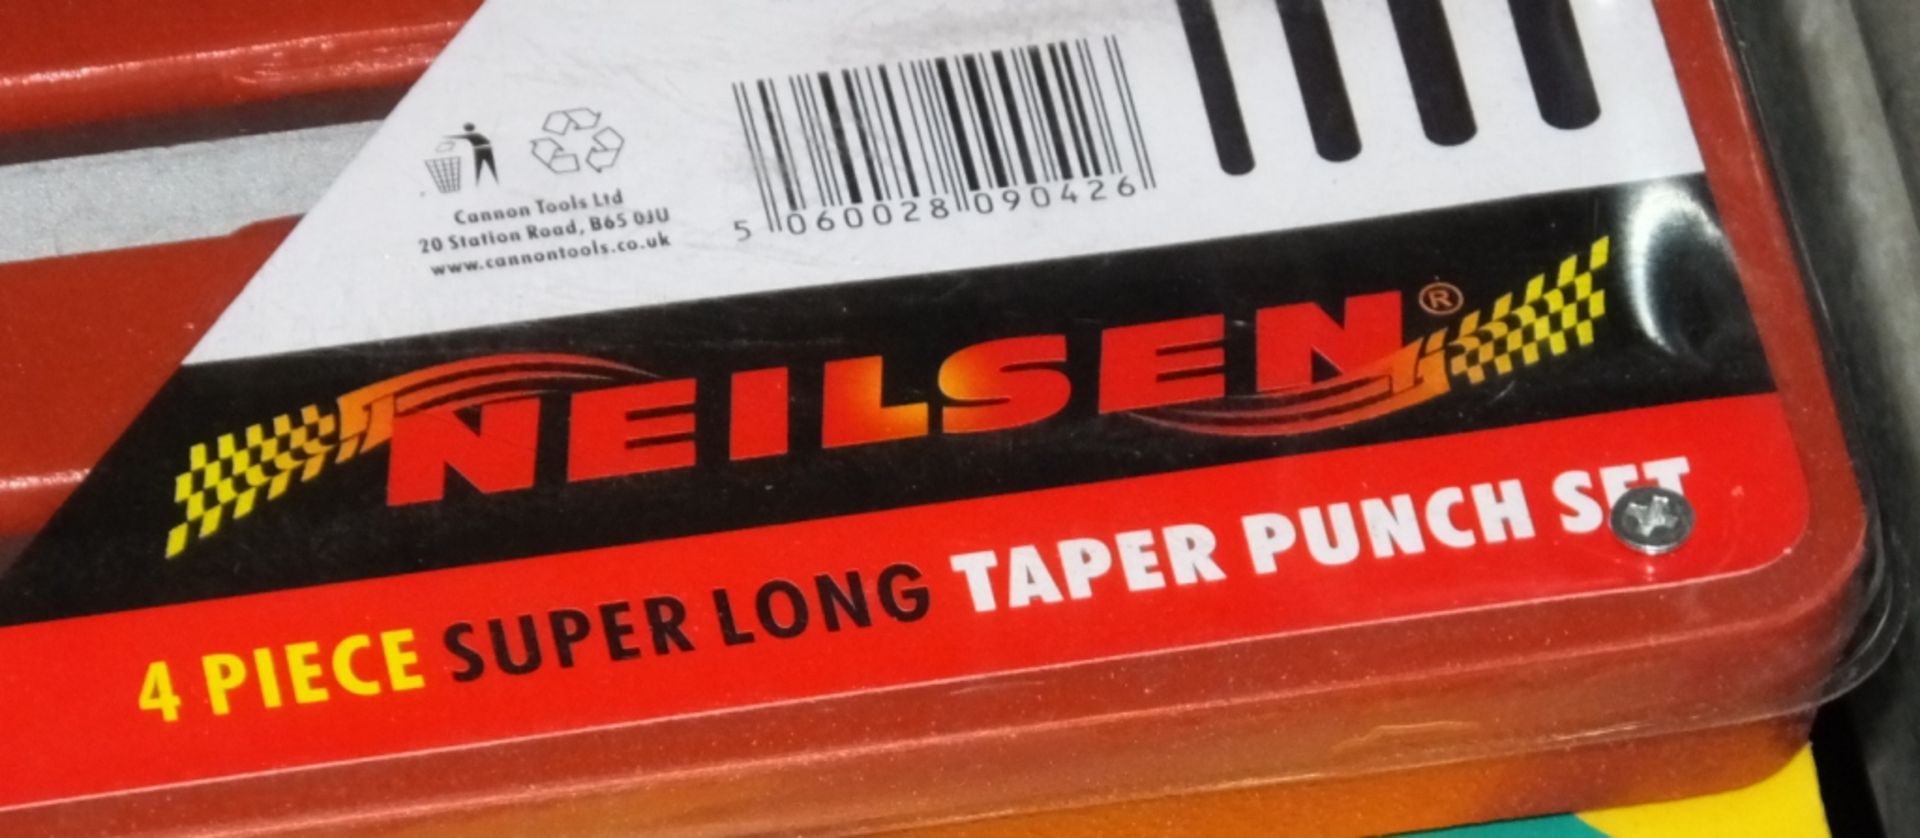 Neilsen 4 piece super long taper punch set - Image 2 of 2